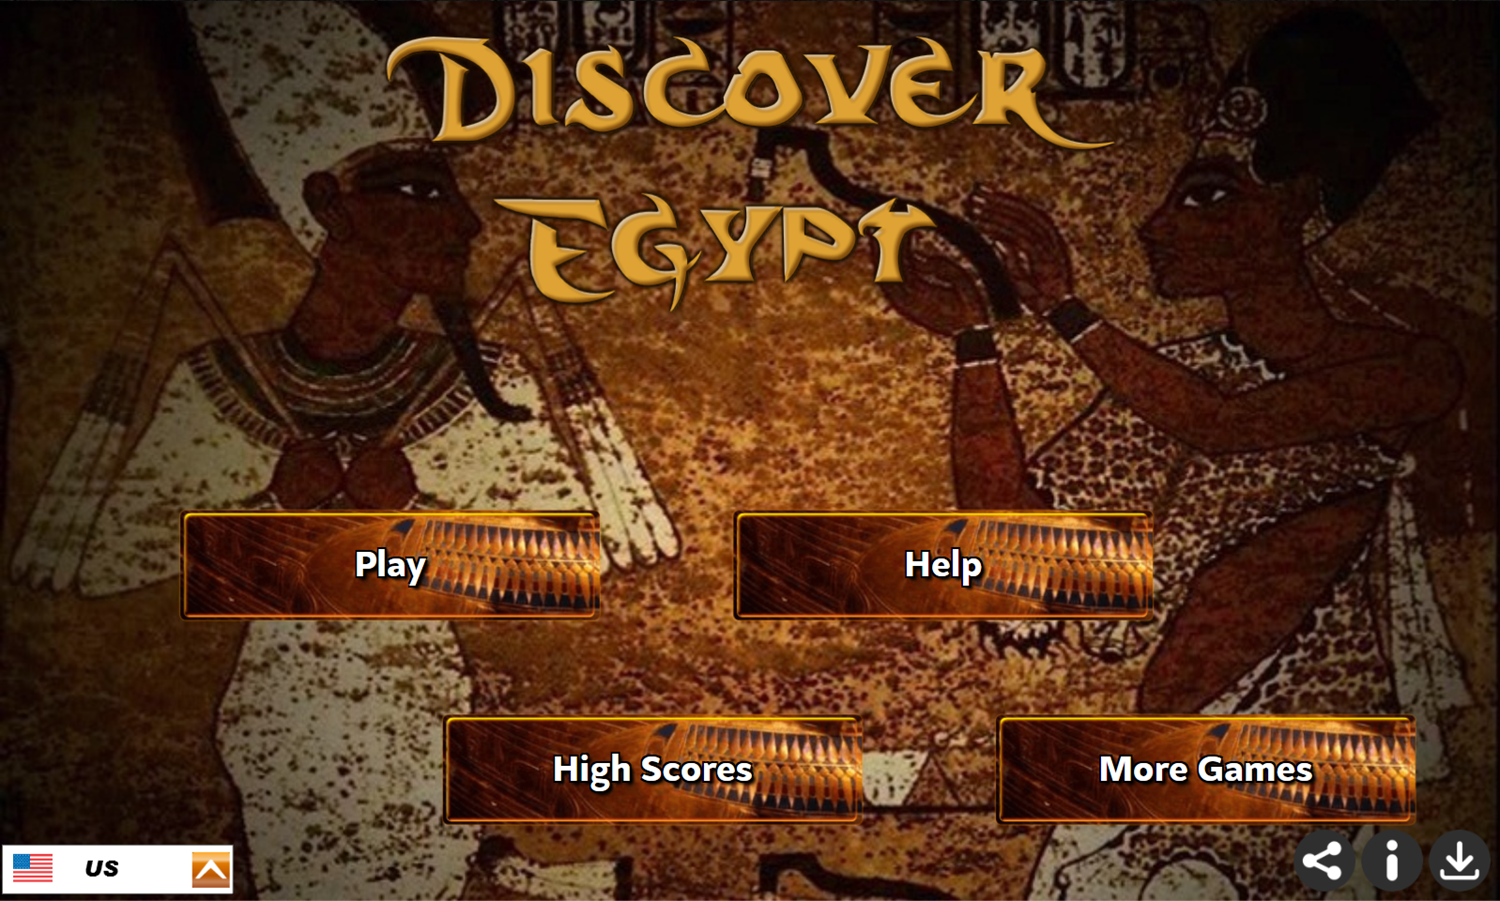 Discover Egypt Game Welcome Screen Screenshot.